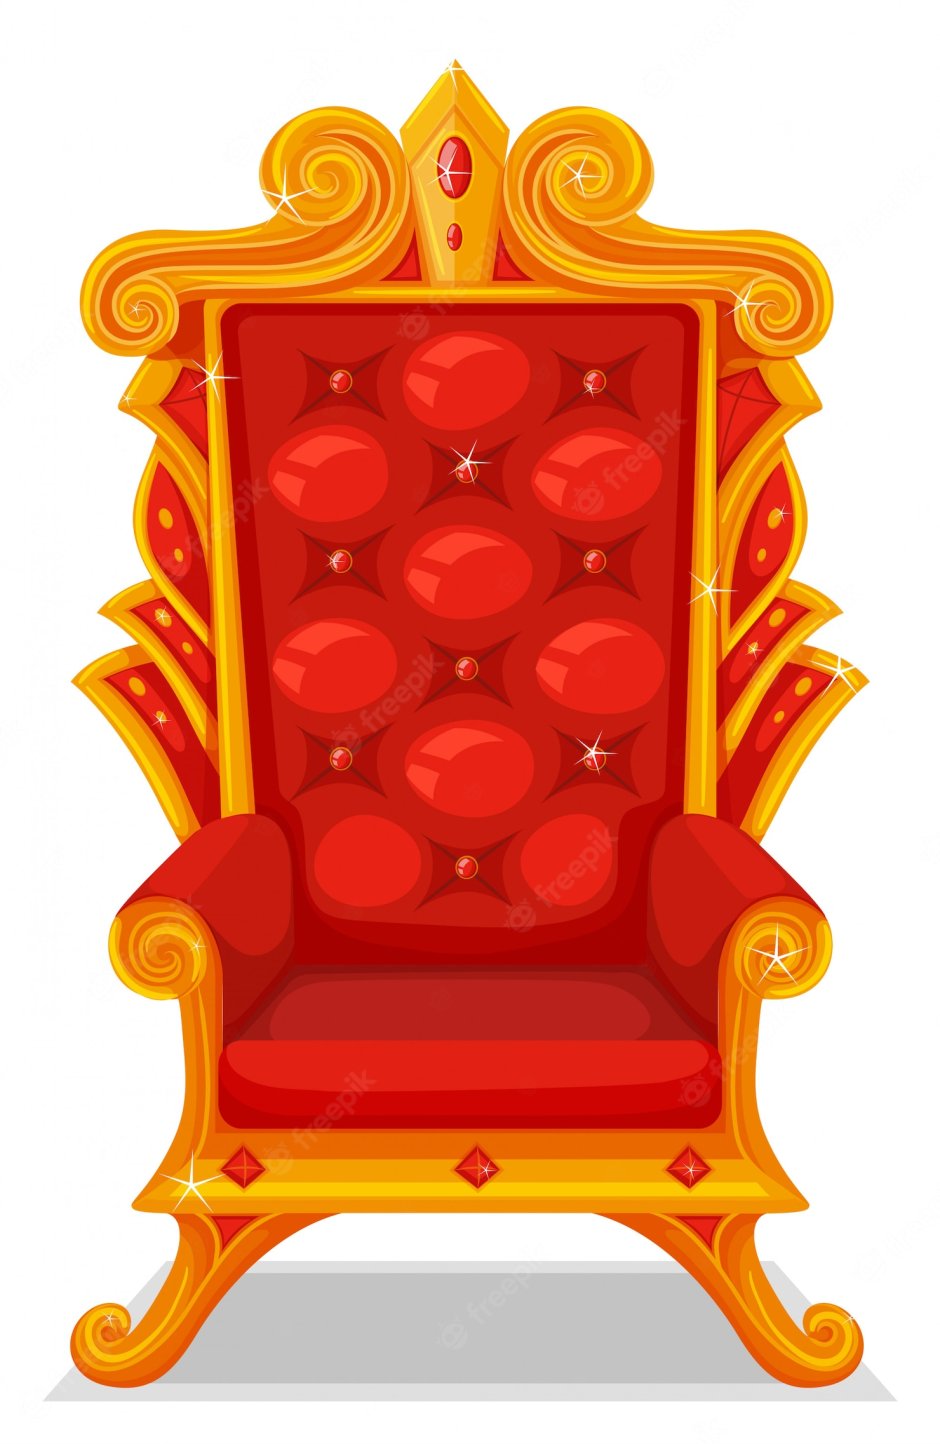 Throne royalty